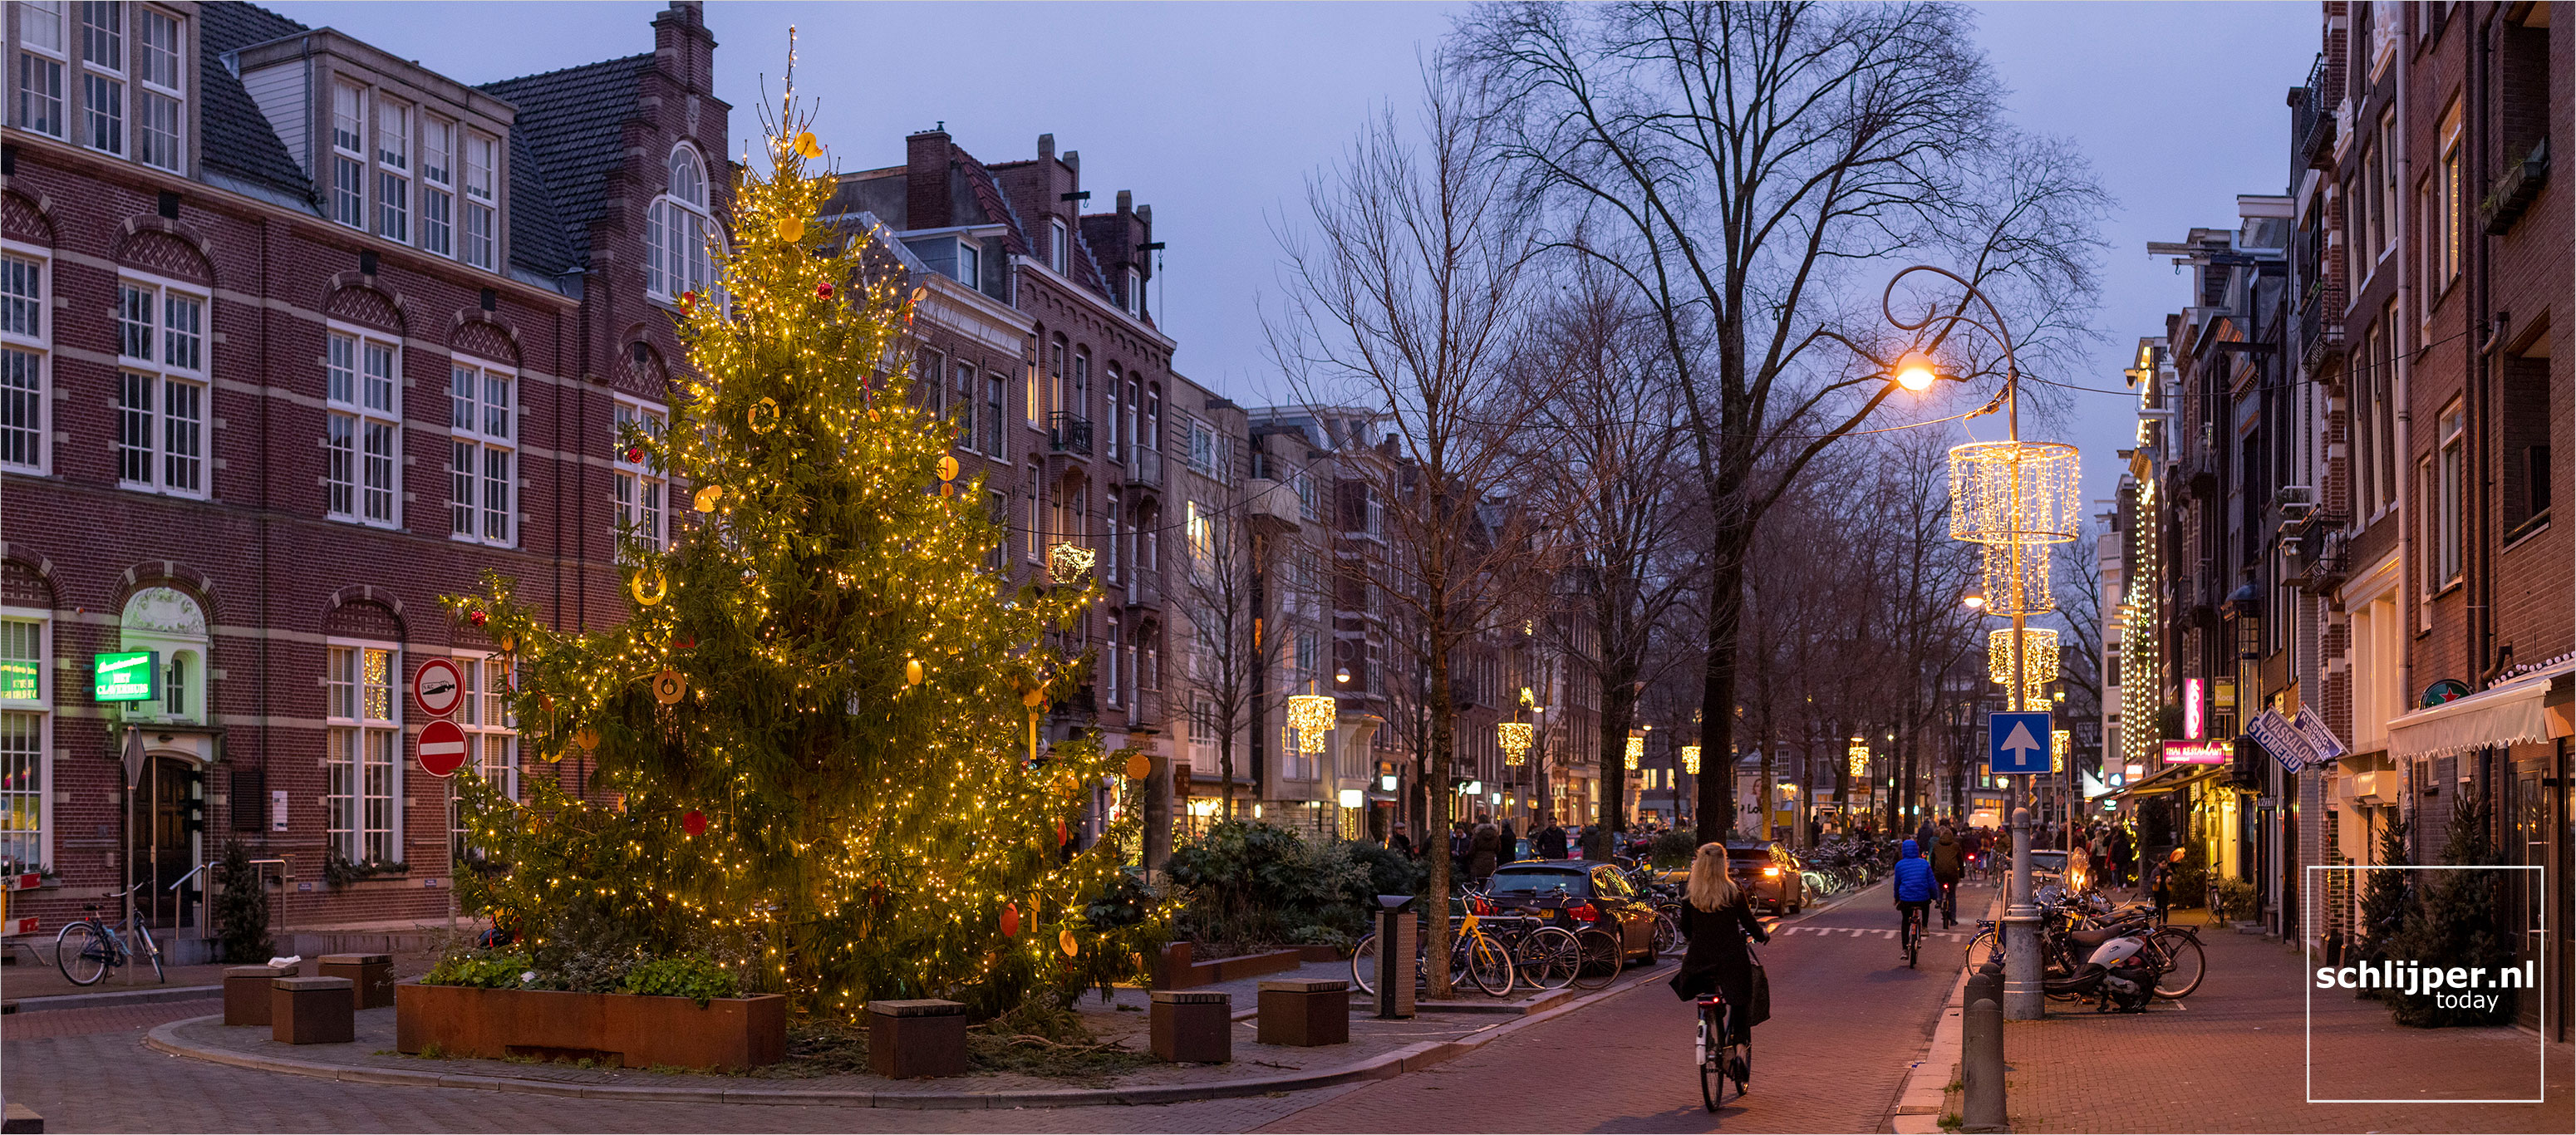 The Netherlands, Amsterdam, 31 december 2020